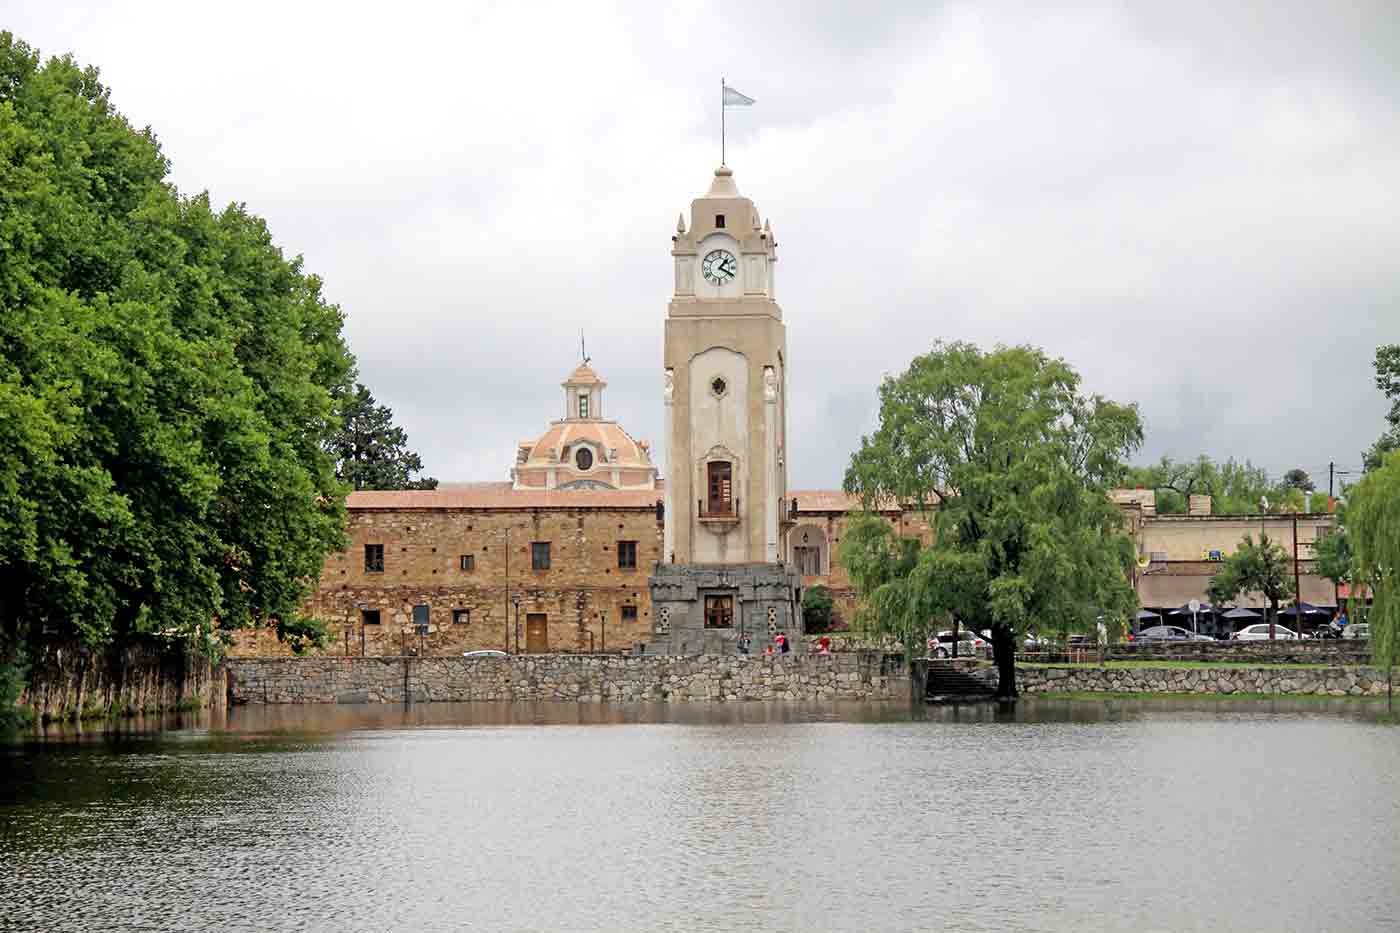 Jesuit Block and Estancias of Córdoba